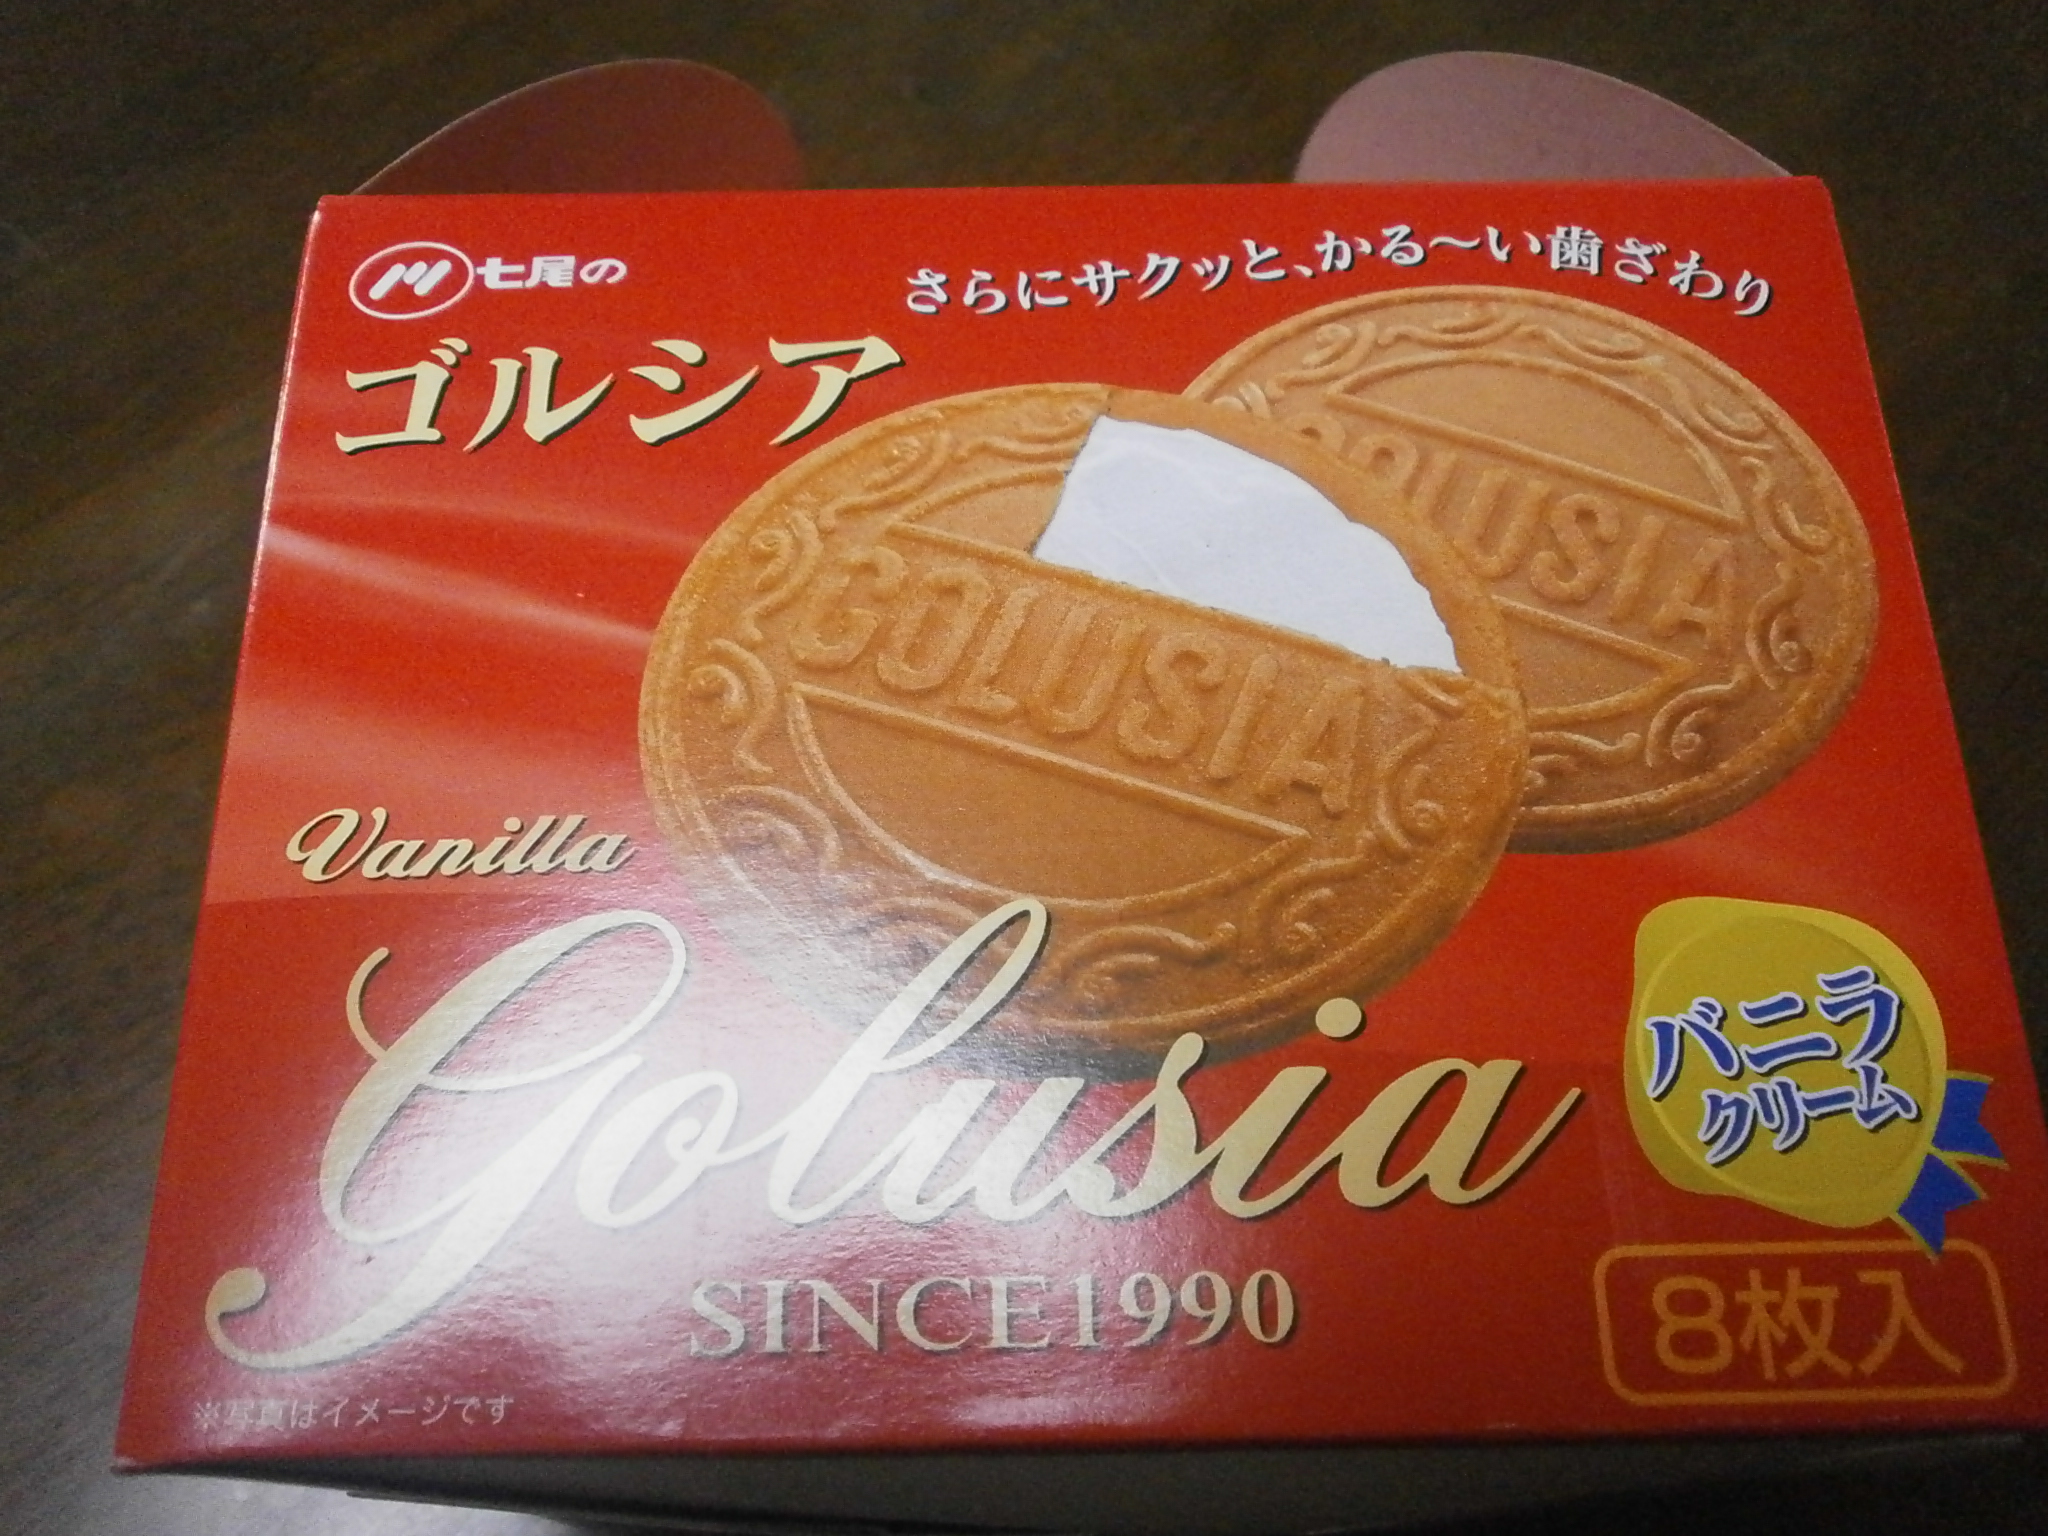 Gorushia (crème à la vanille)